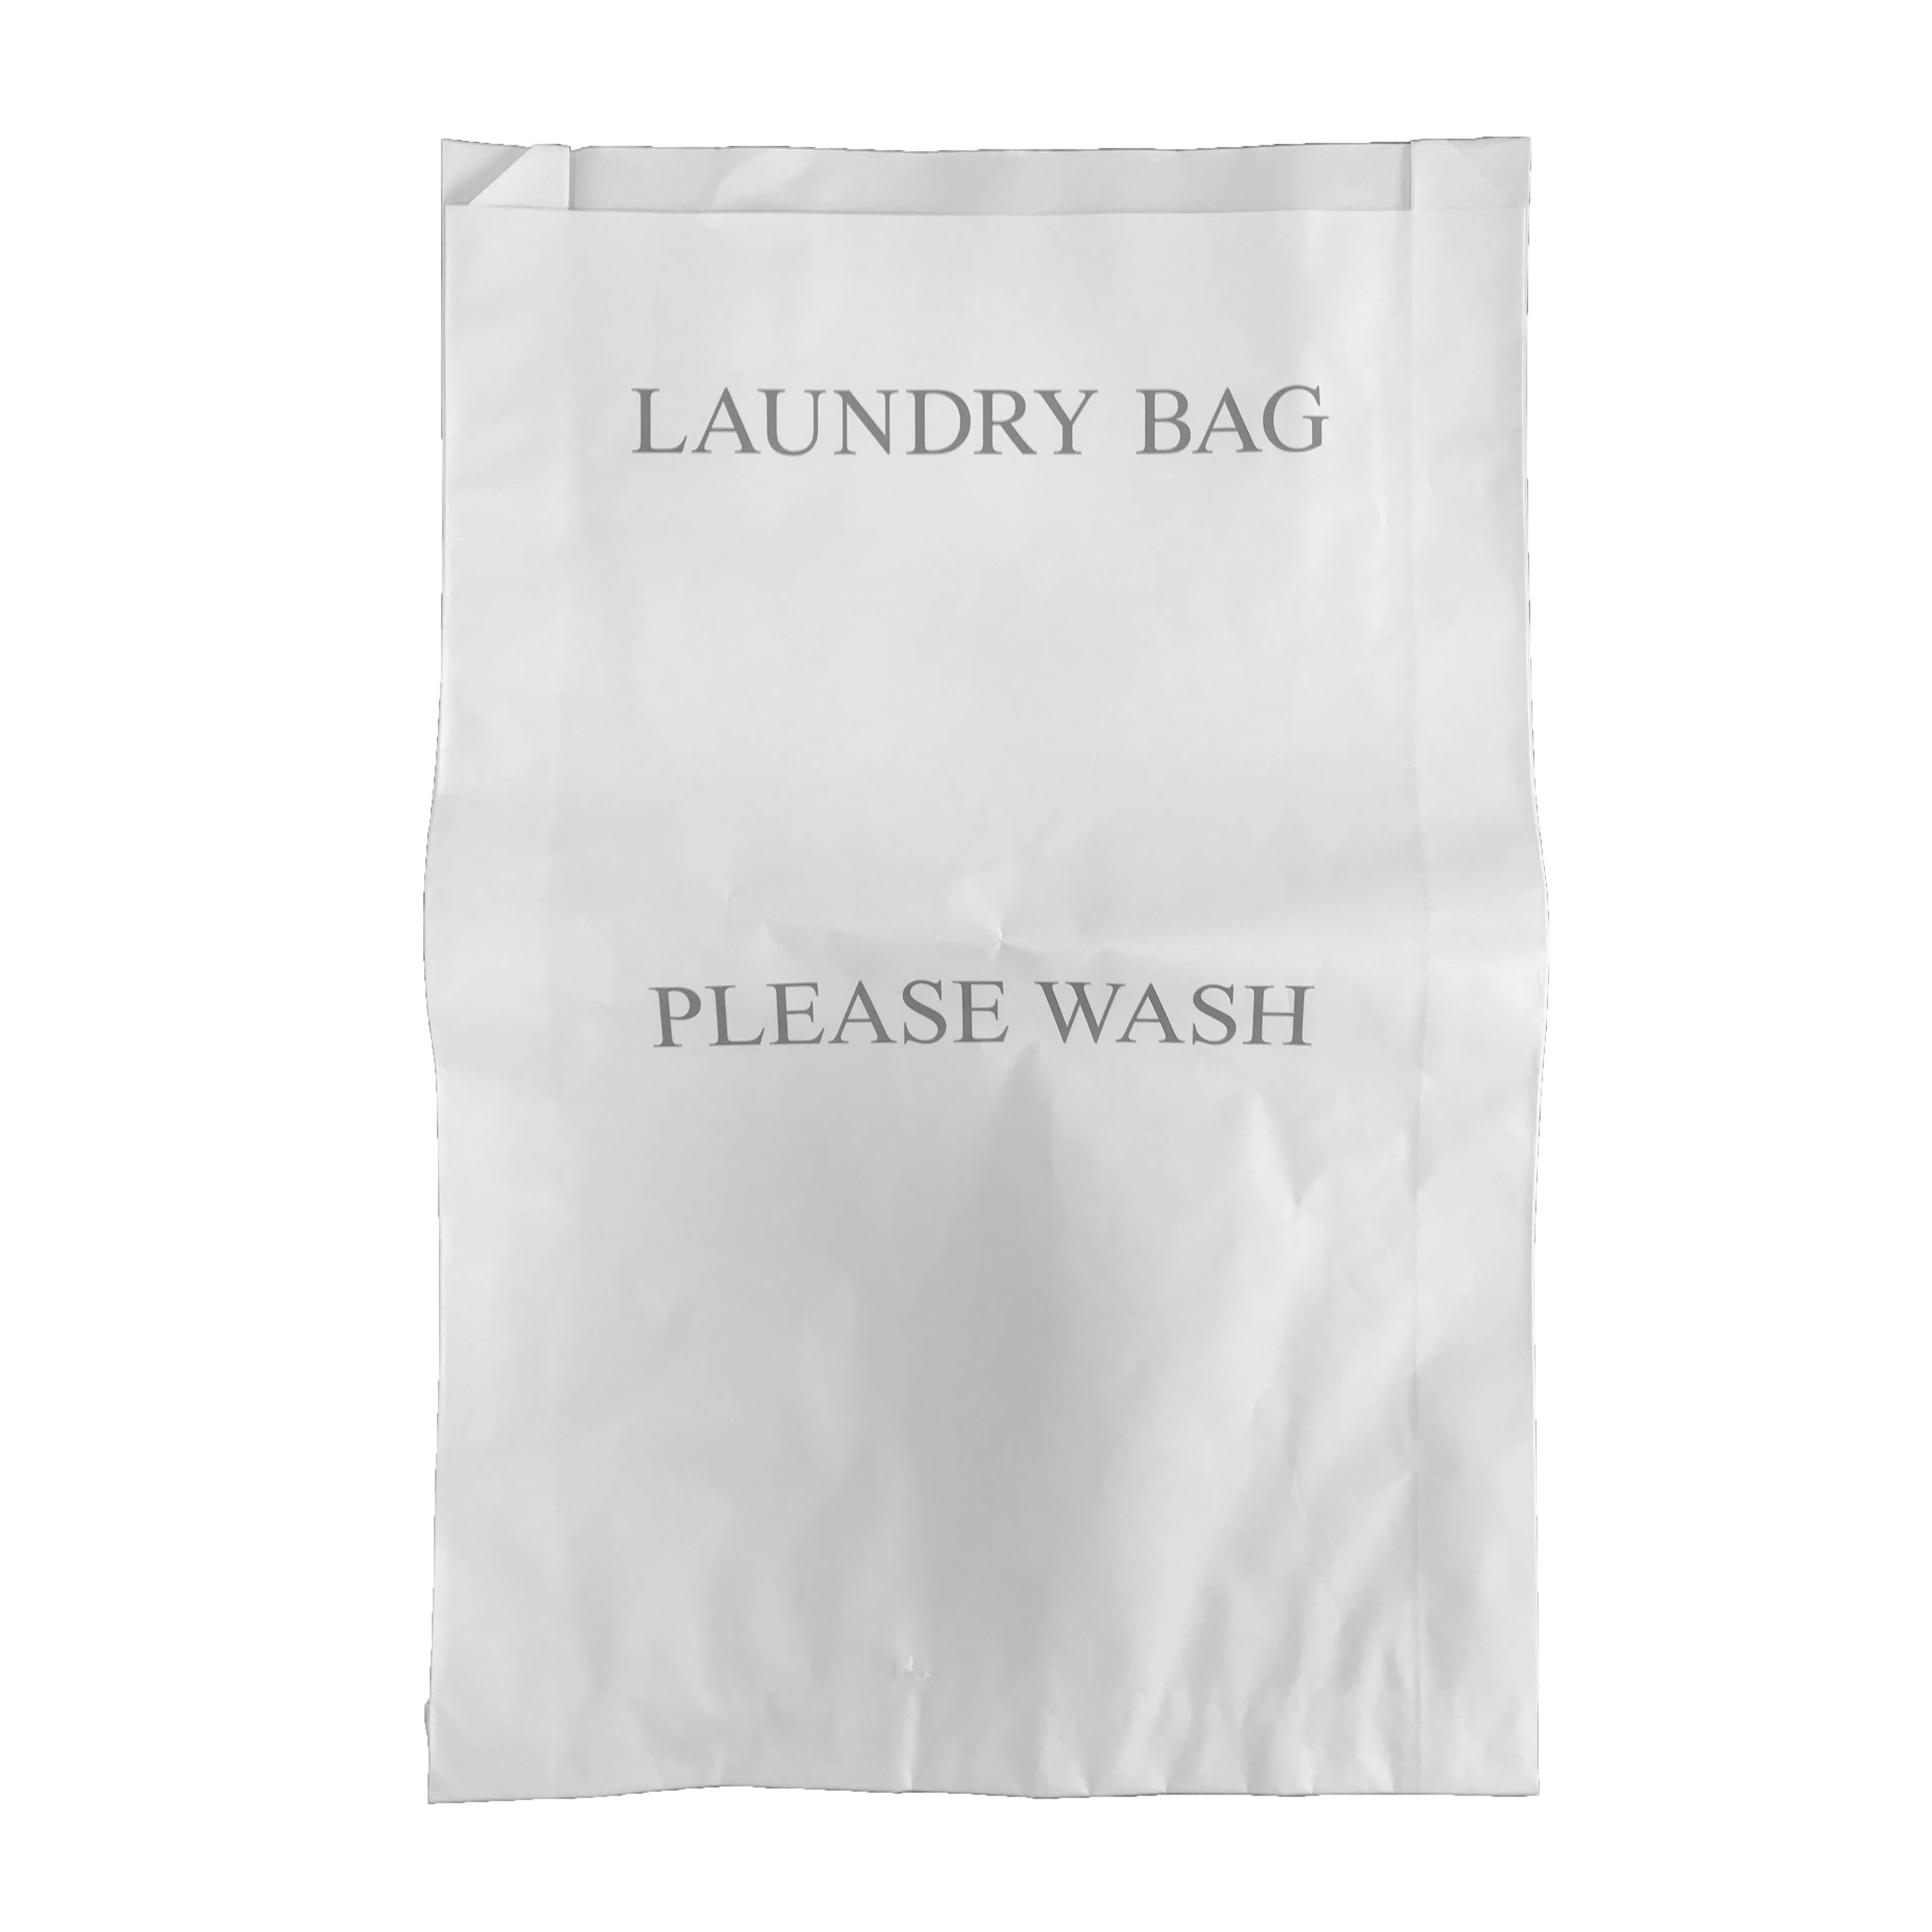 Laundry bag paper